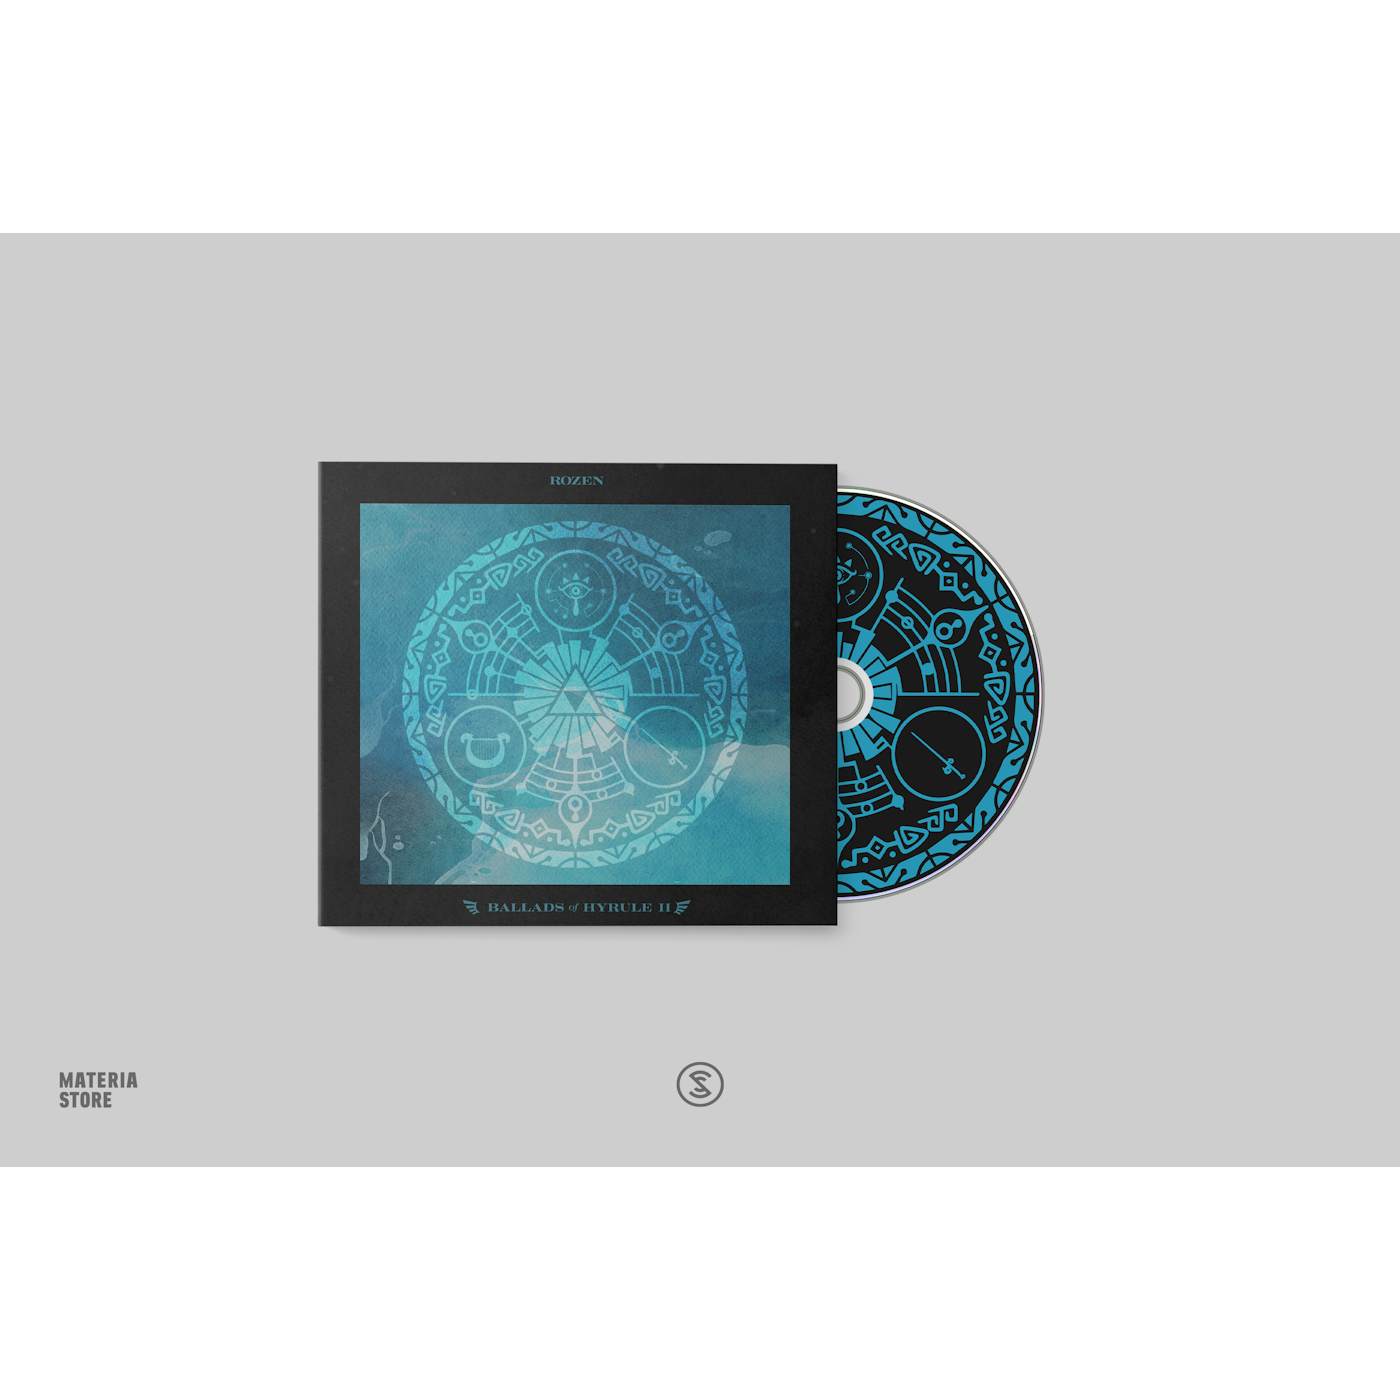 Ballads of Hyrule II - ROZEN (Compact Disc)